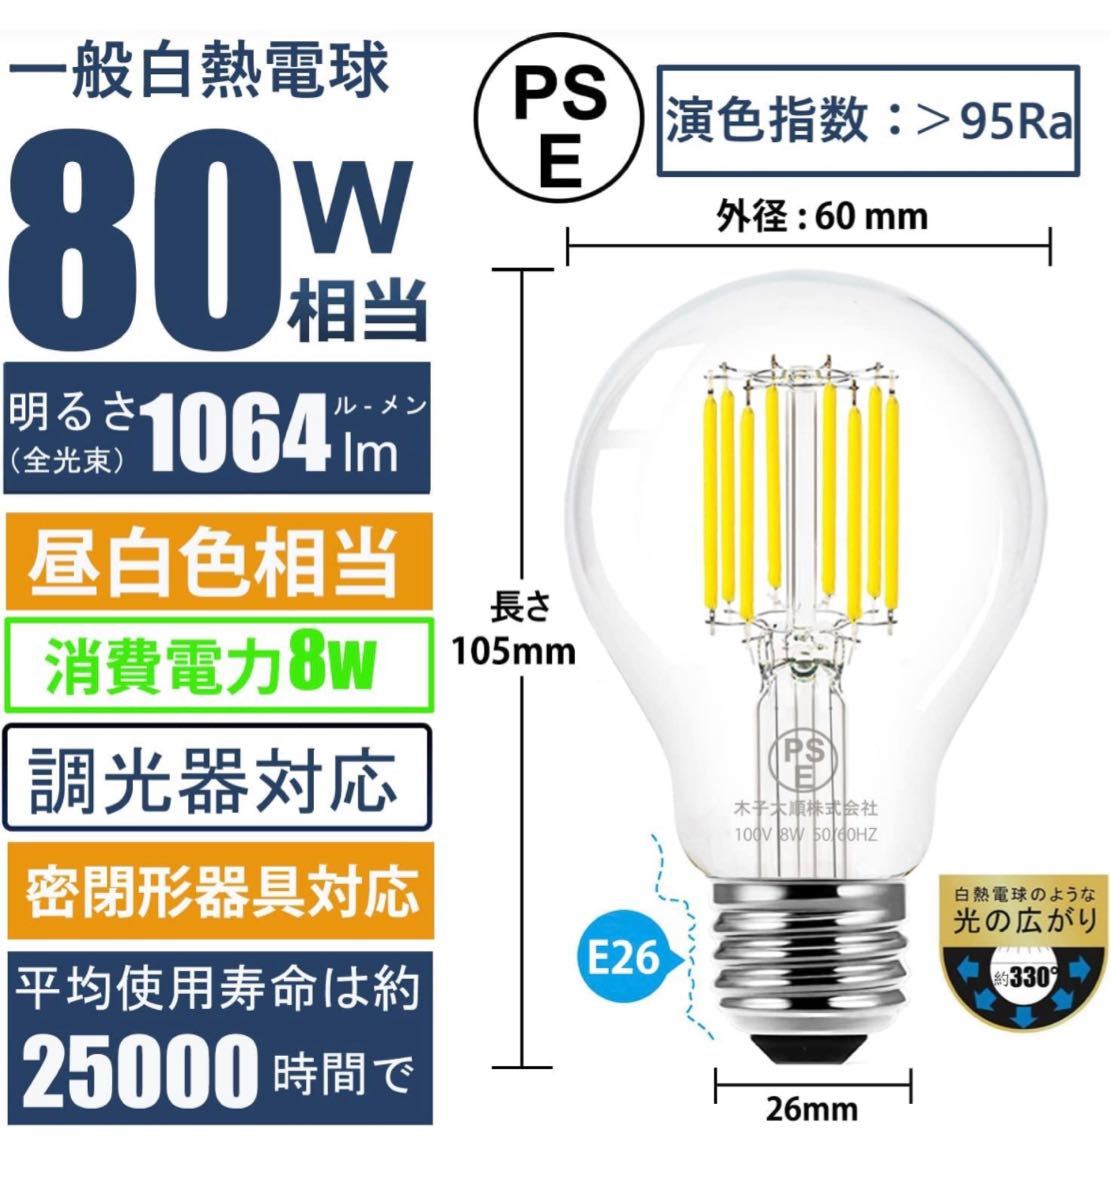 691) Acidea LEDシャンデリア電球 E26口金 LED電球 80W形エジソン電球 4000K 昼白色 8W LED フィラメント電球 高輝度 調光器対応 4個入_画像2